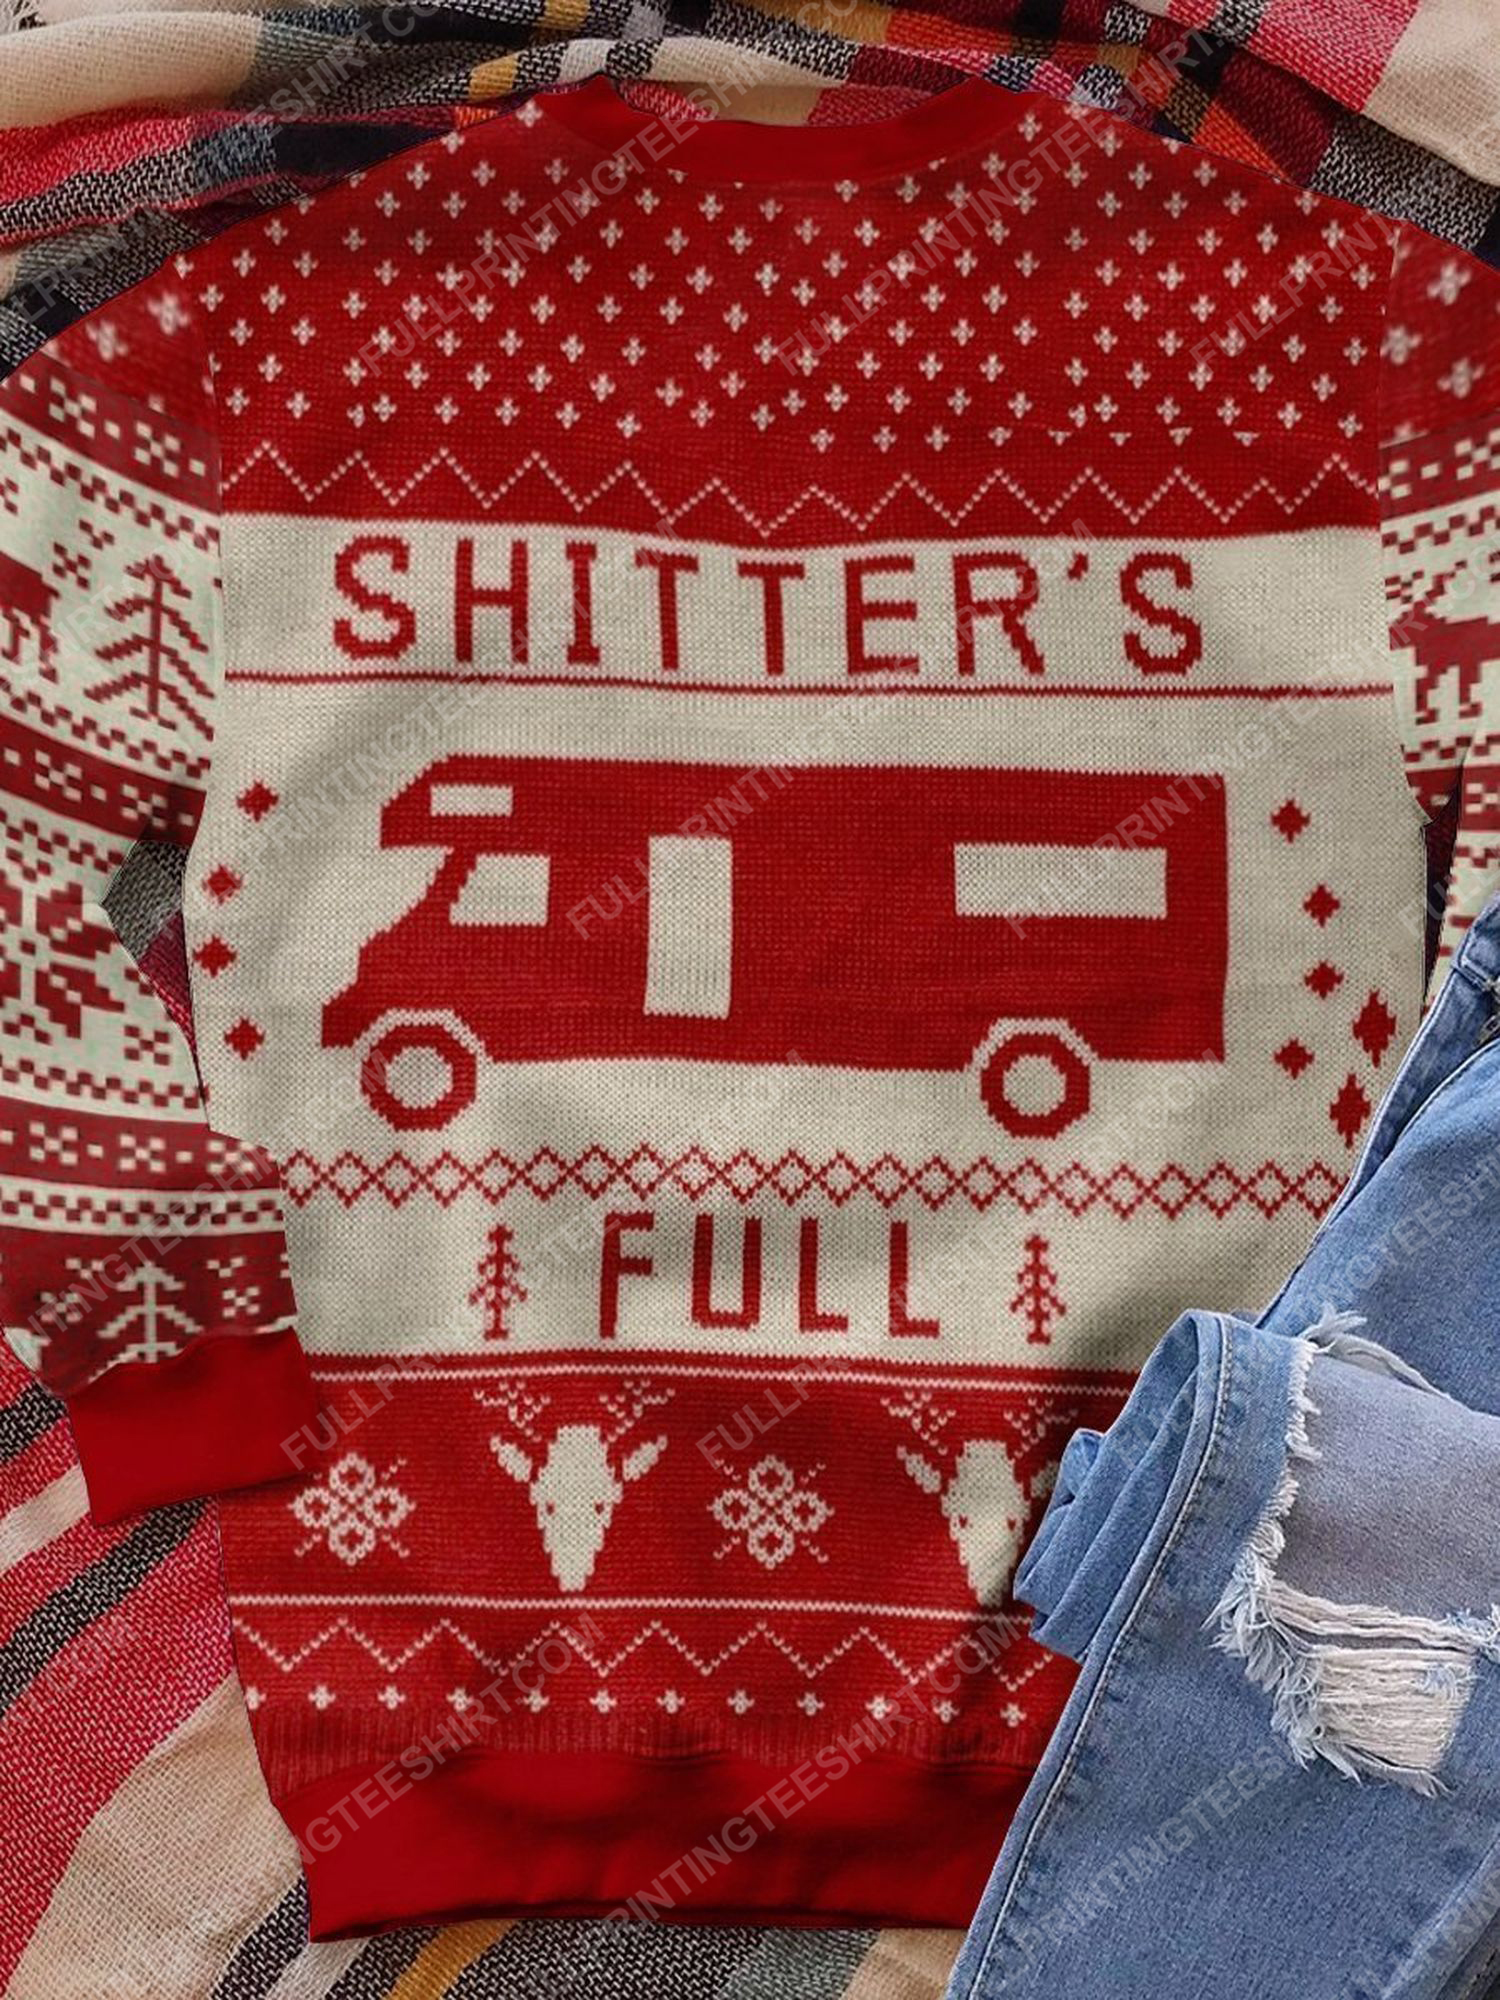 Christmas vacation shitter's full full print shirt 3